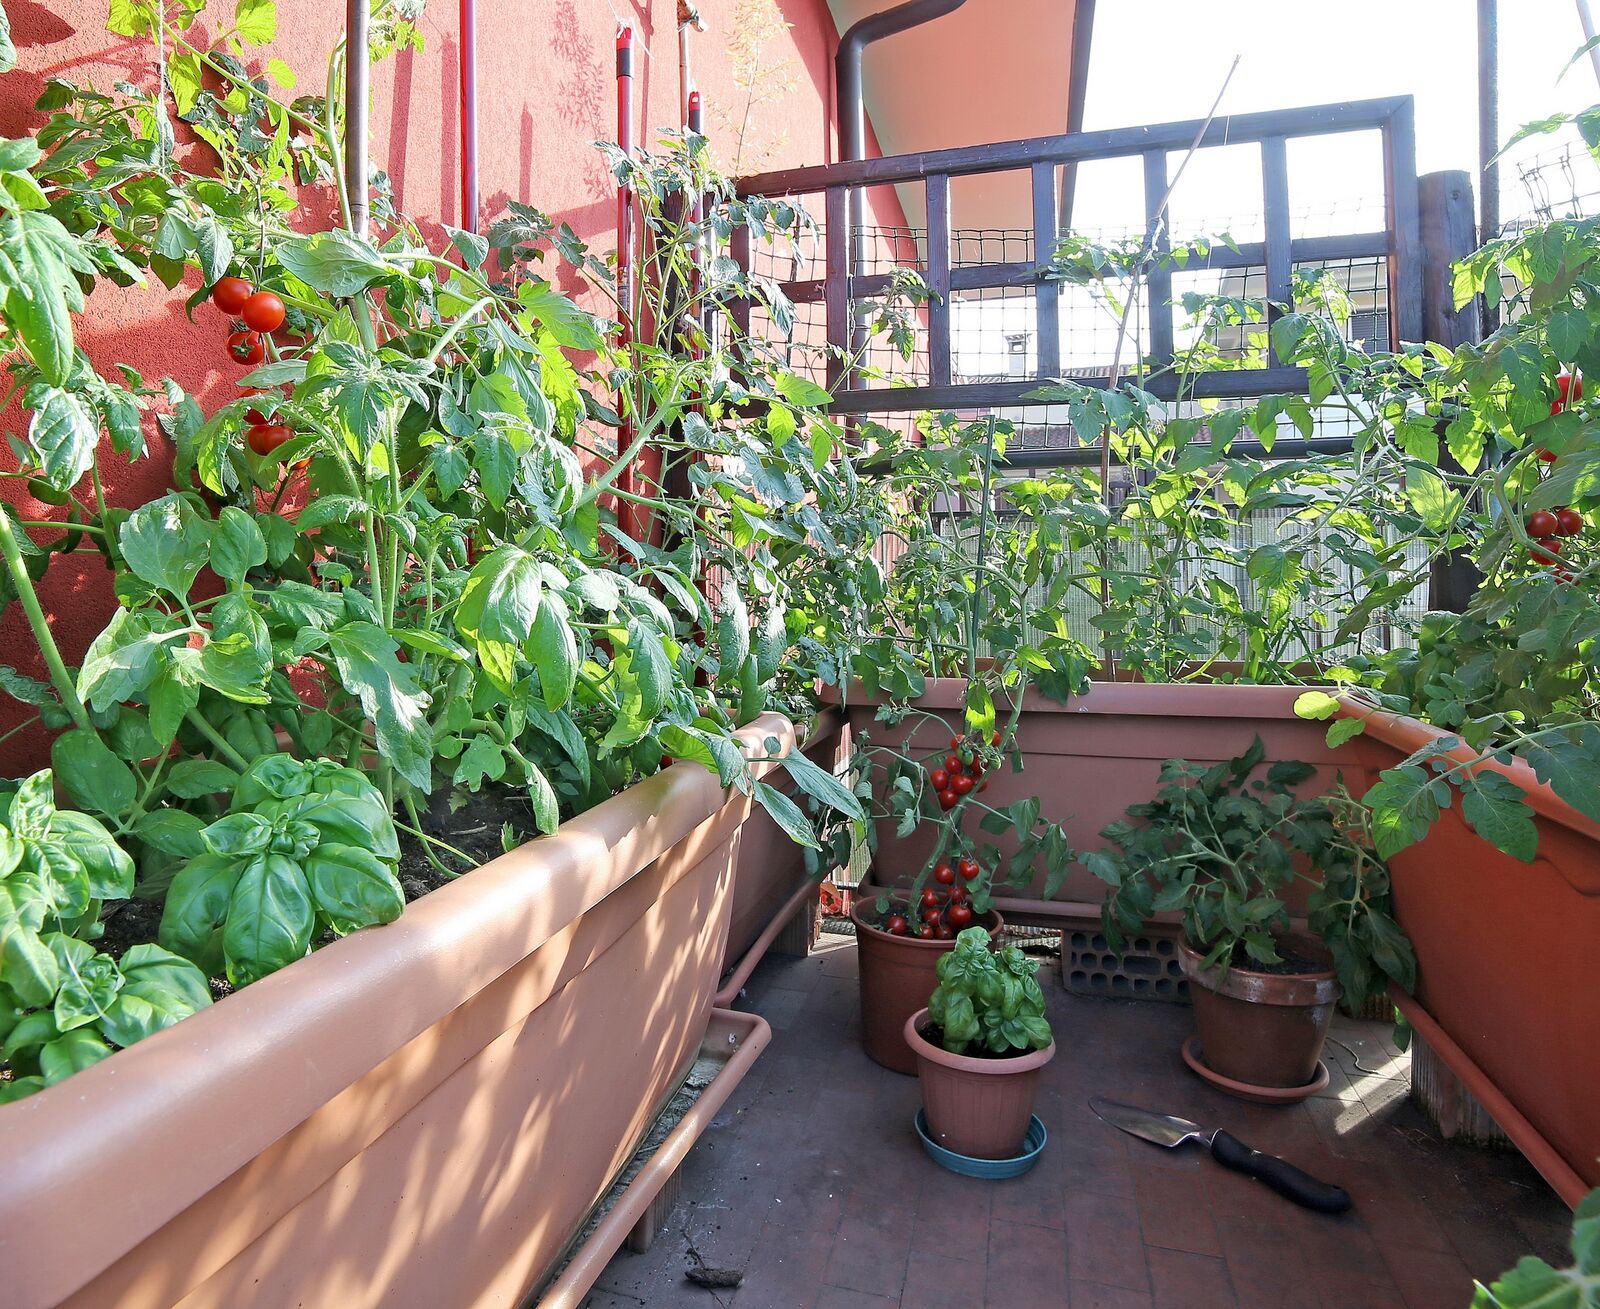 Growing tomatoes on the balcony